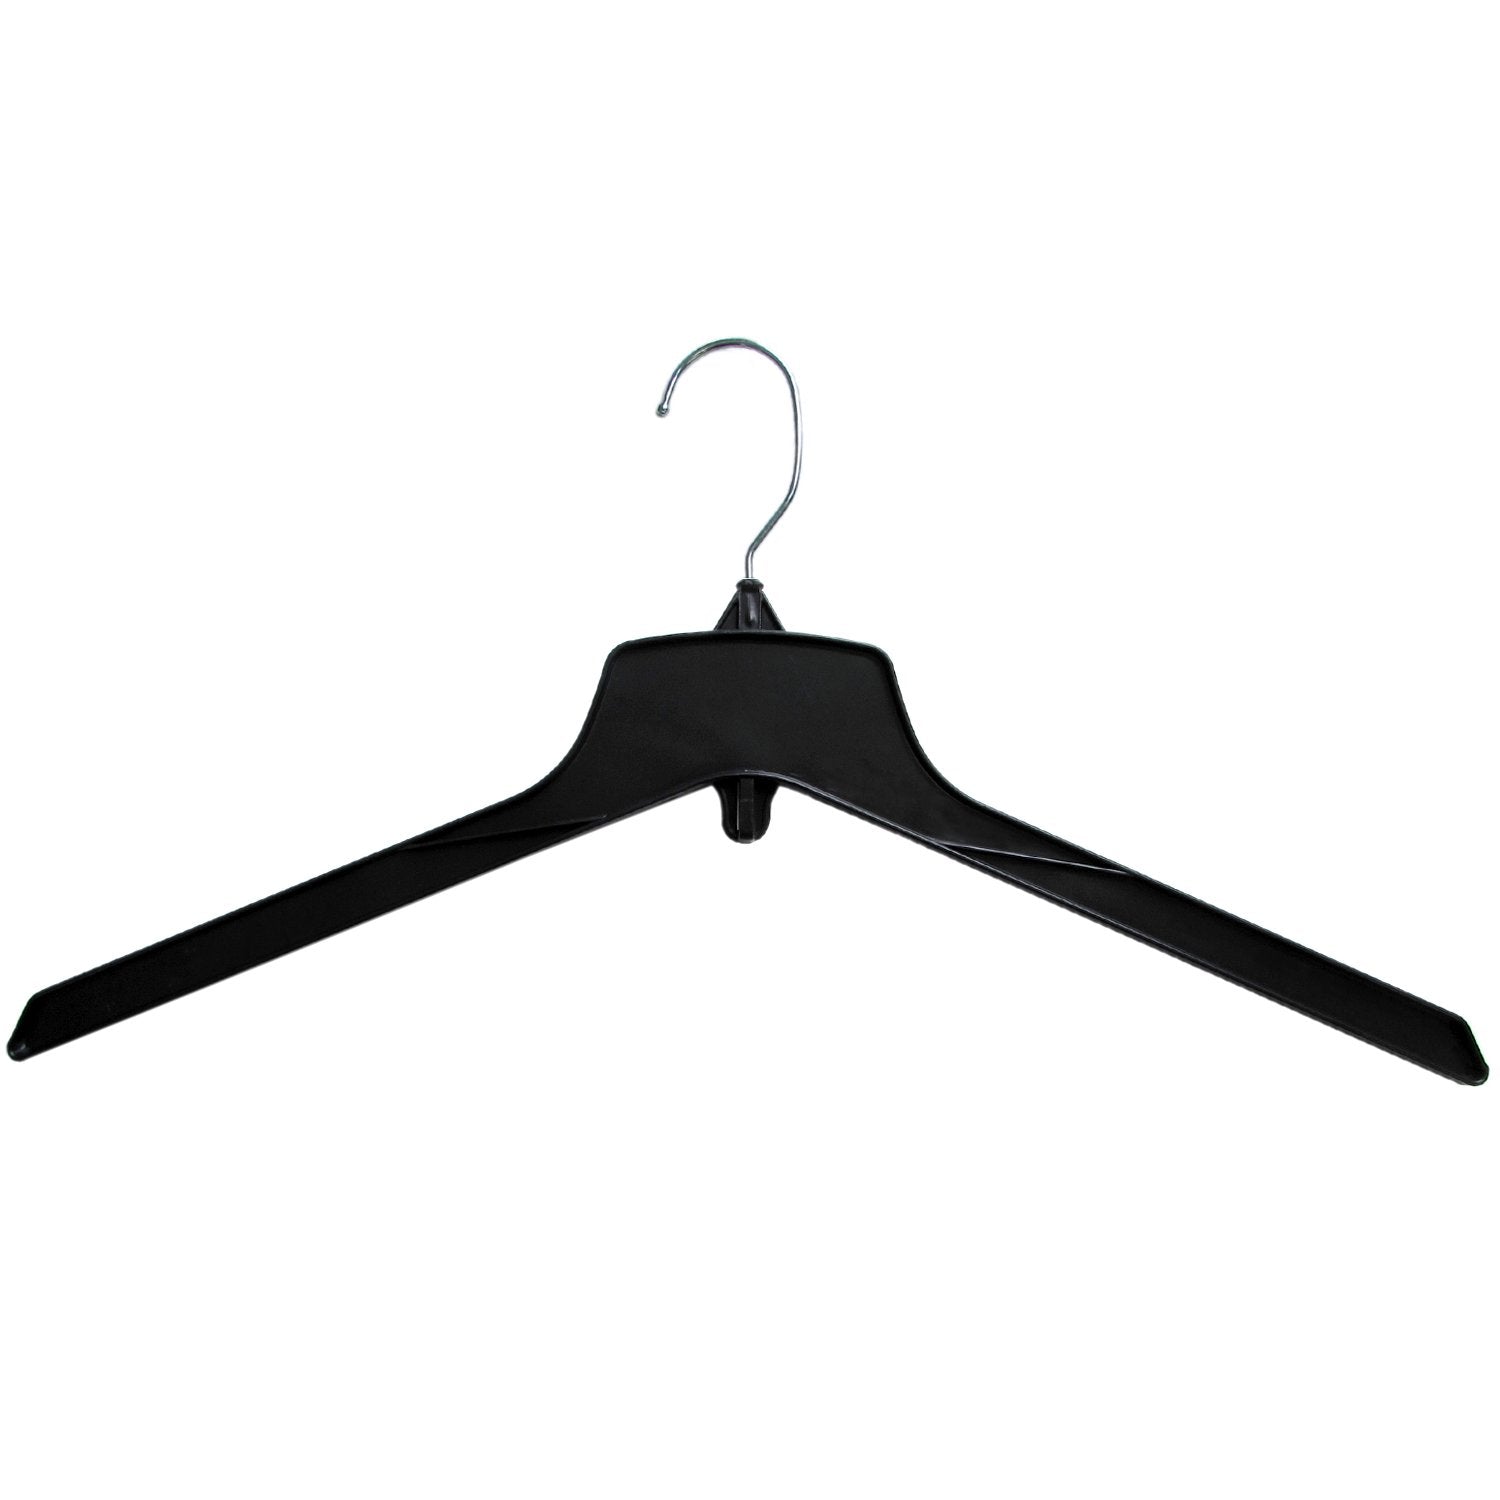 Hanger Central Heavy-Duty Black Plastic Closet Department Store Coat Hangers, 19 Inch, 100 Pack